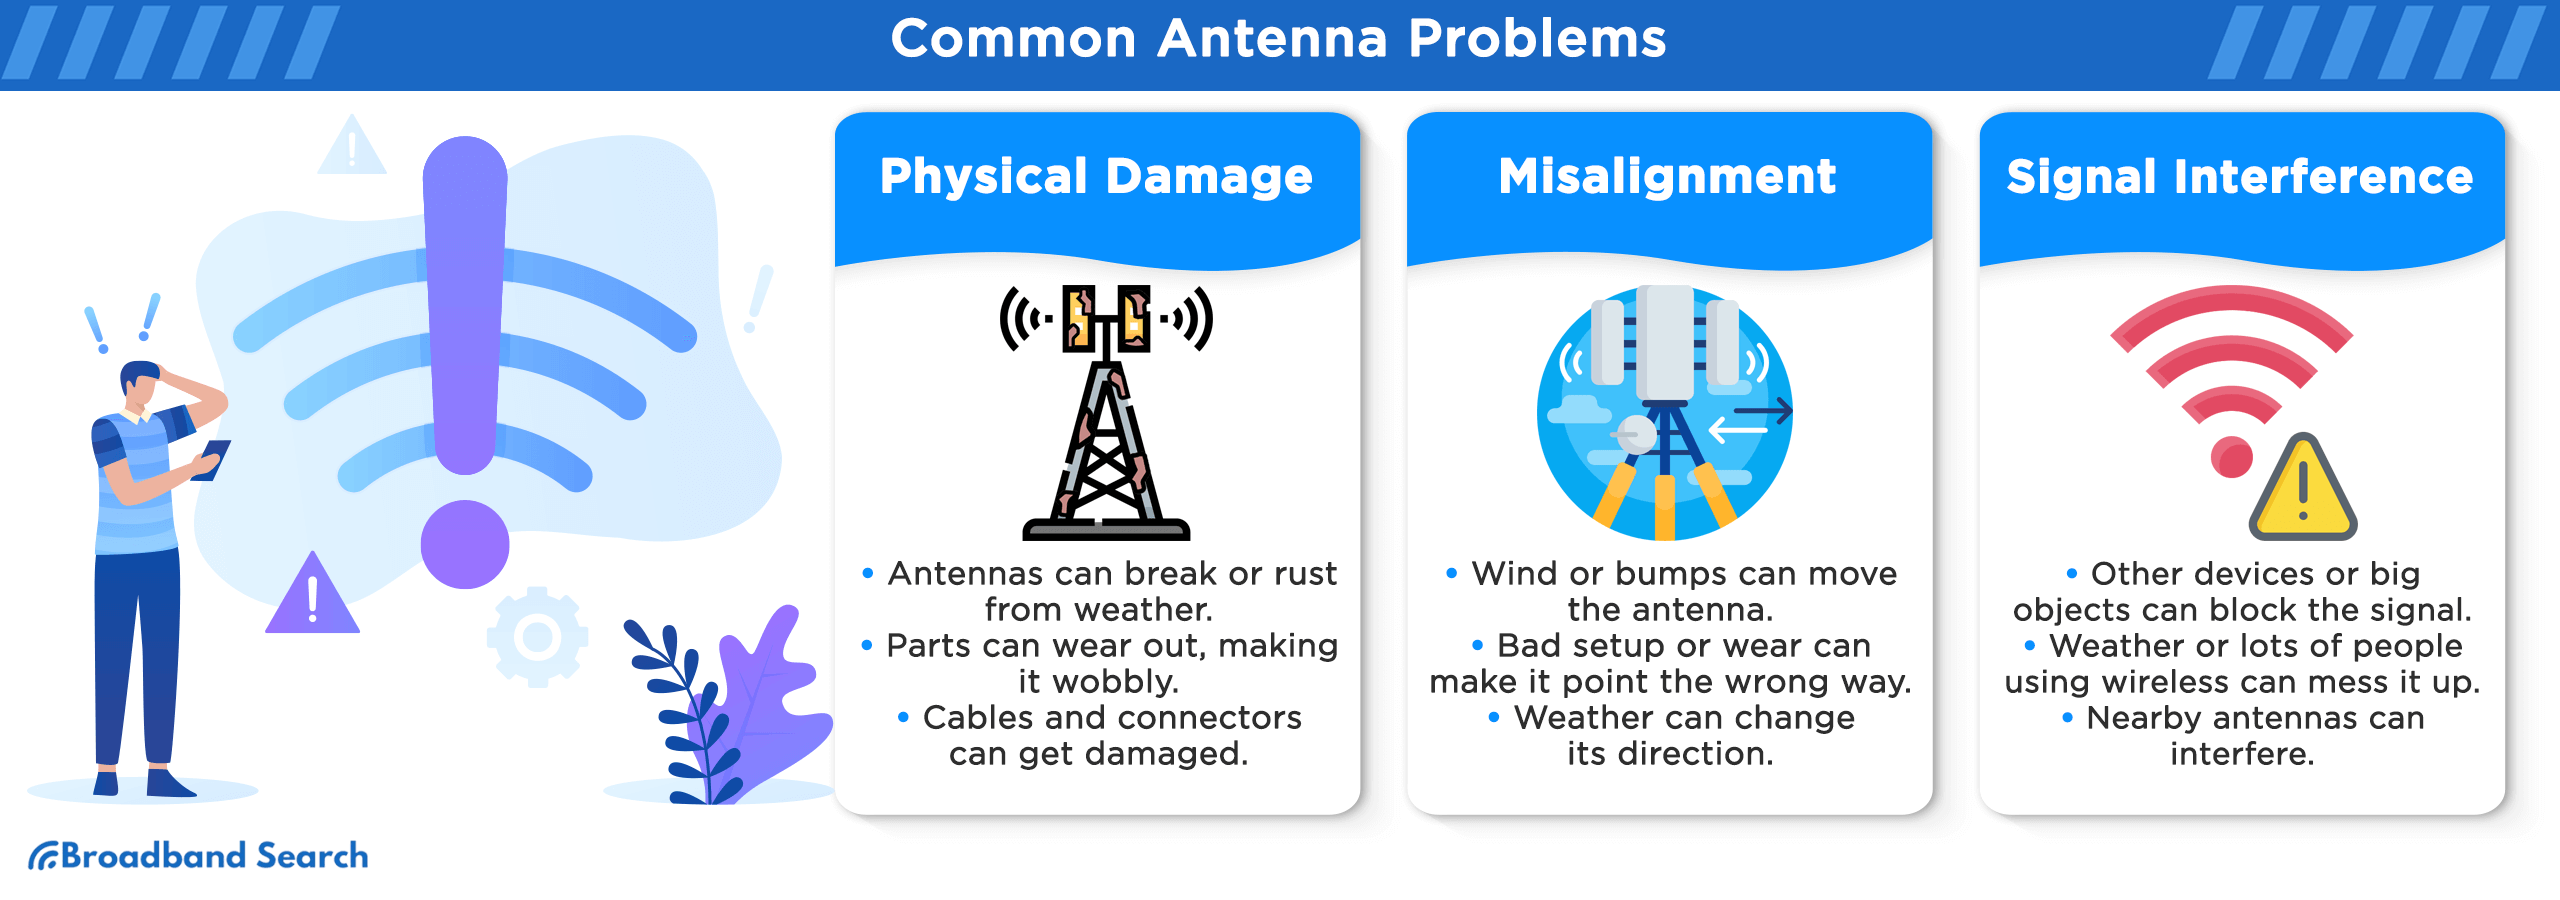 Common Antenna Problems